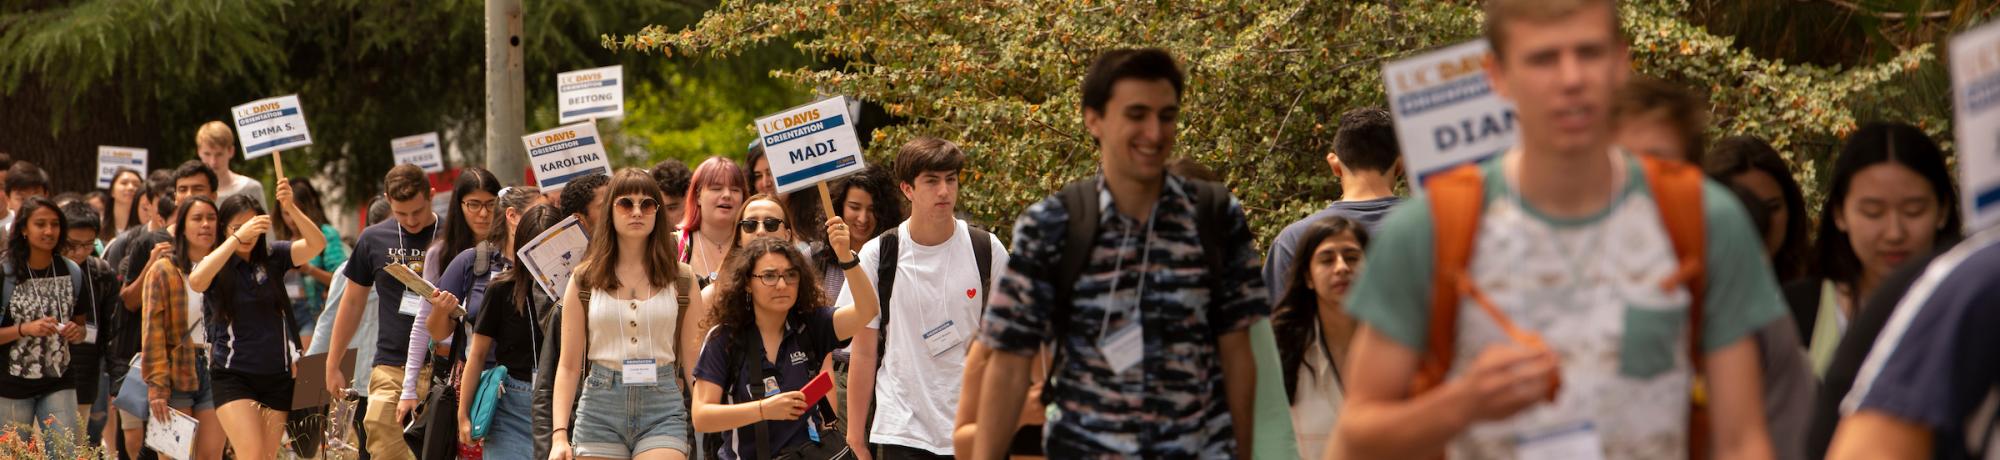 Orientation groups walking on campus